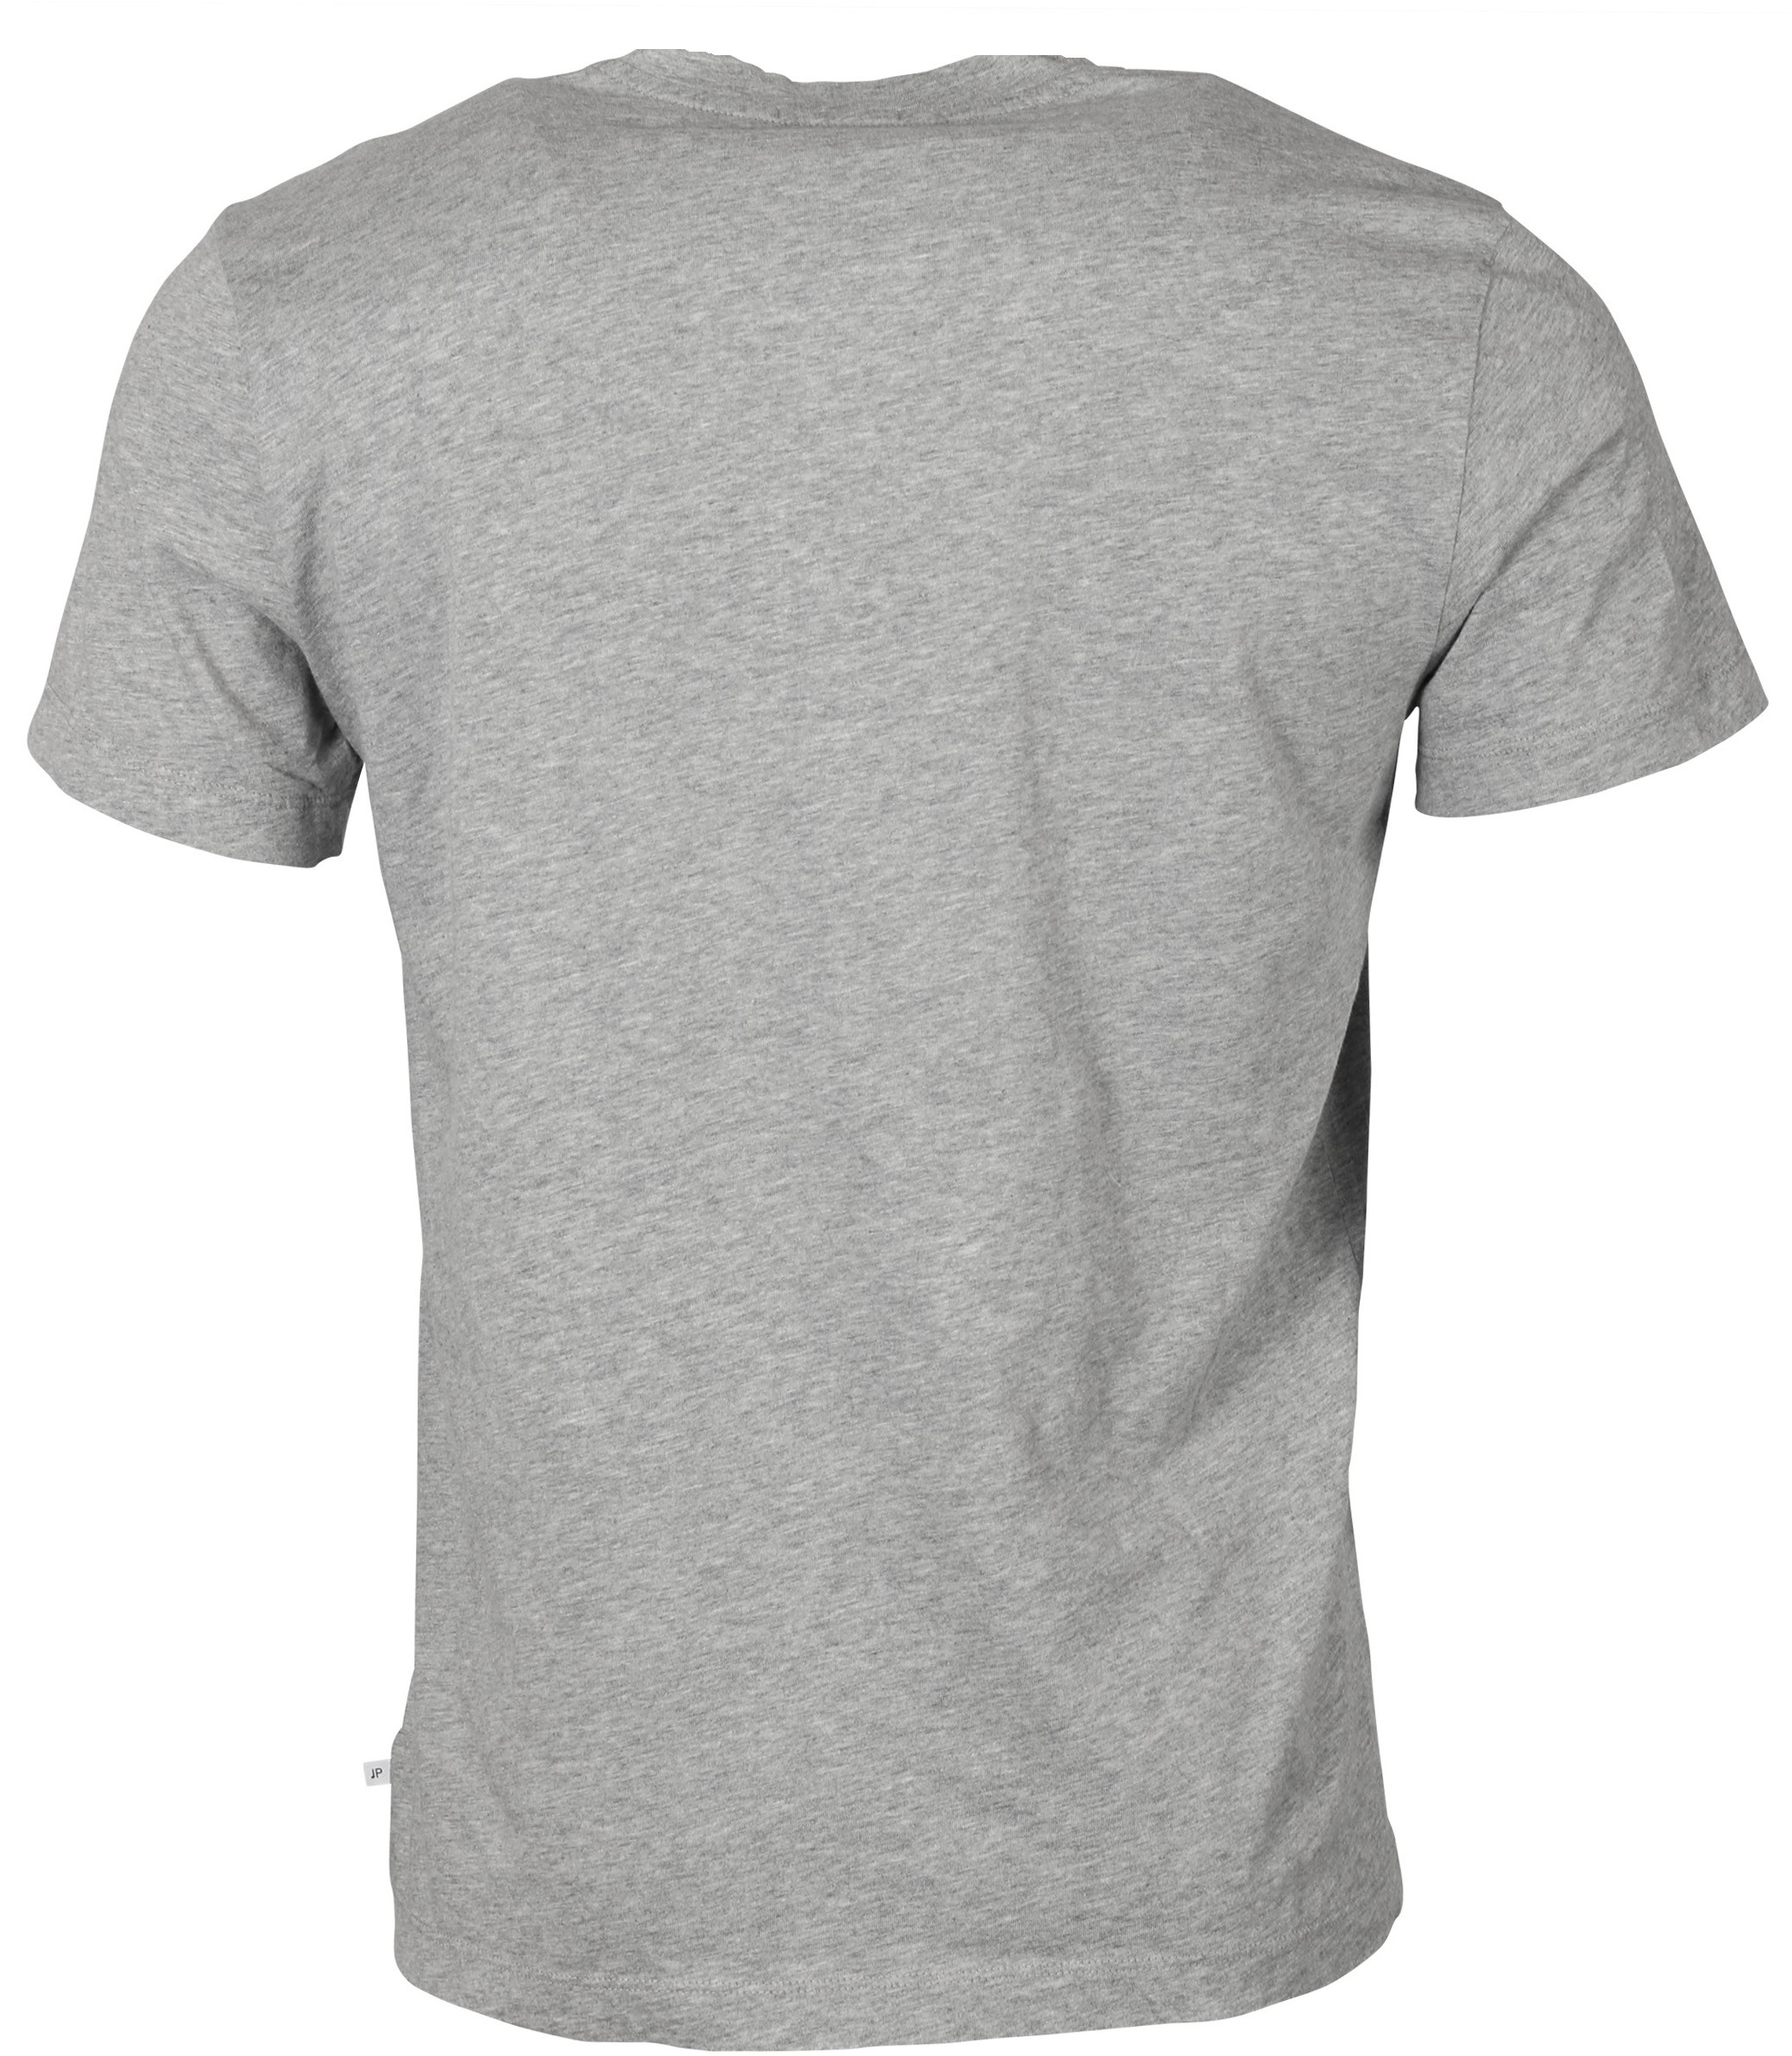 James Perse T-Shirt V-Neck in Heathergrey 2XL/5